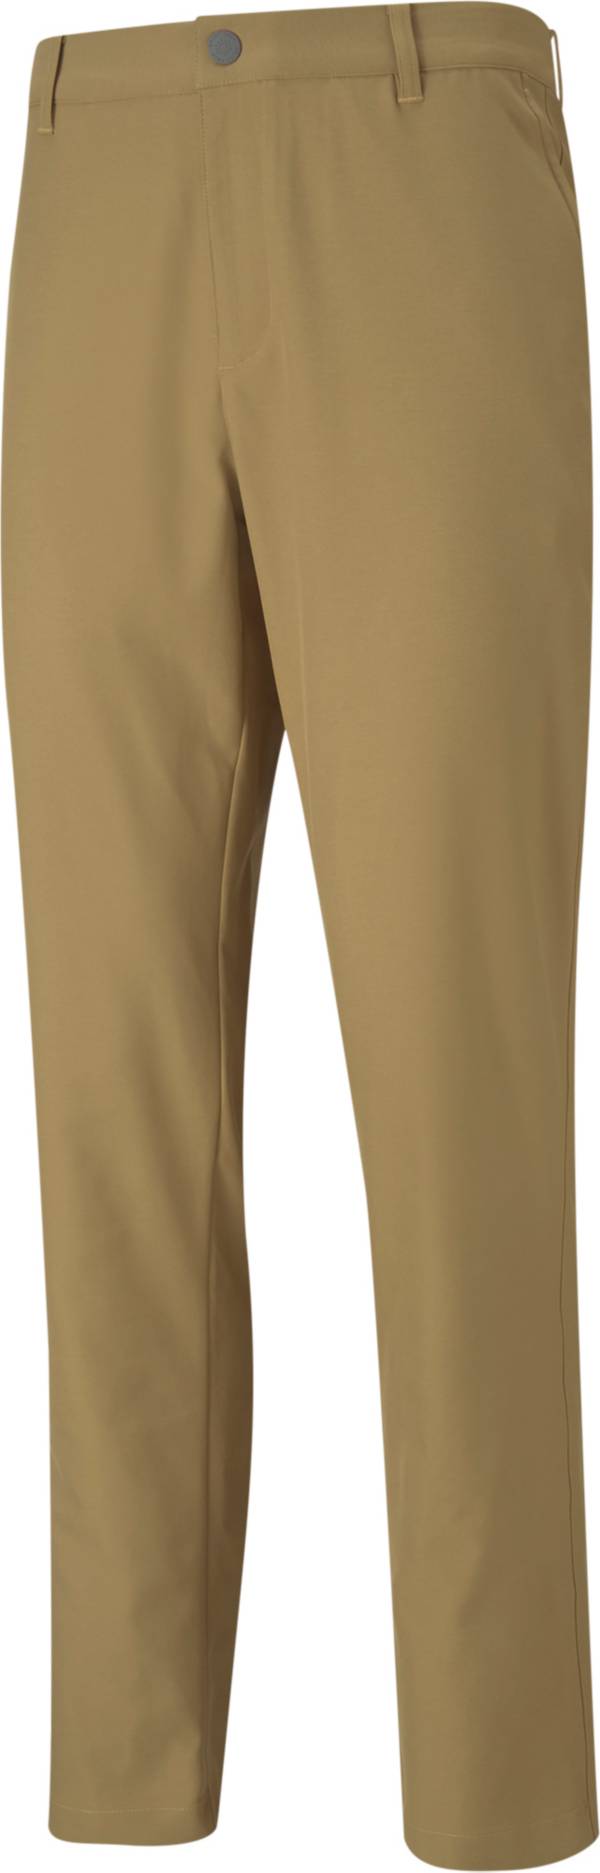 Puma Men's Jackpot Golf Pants product image